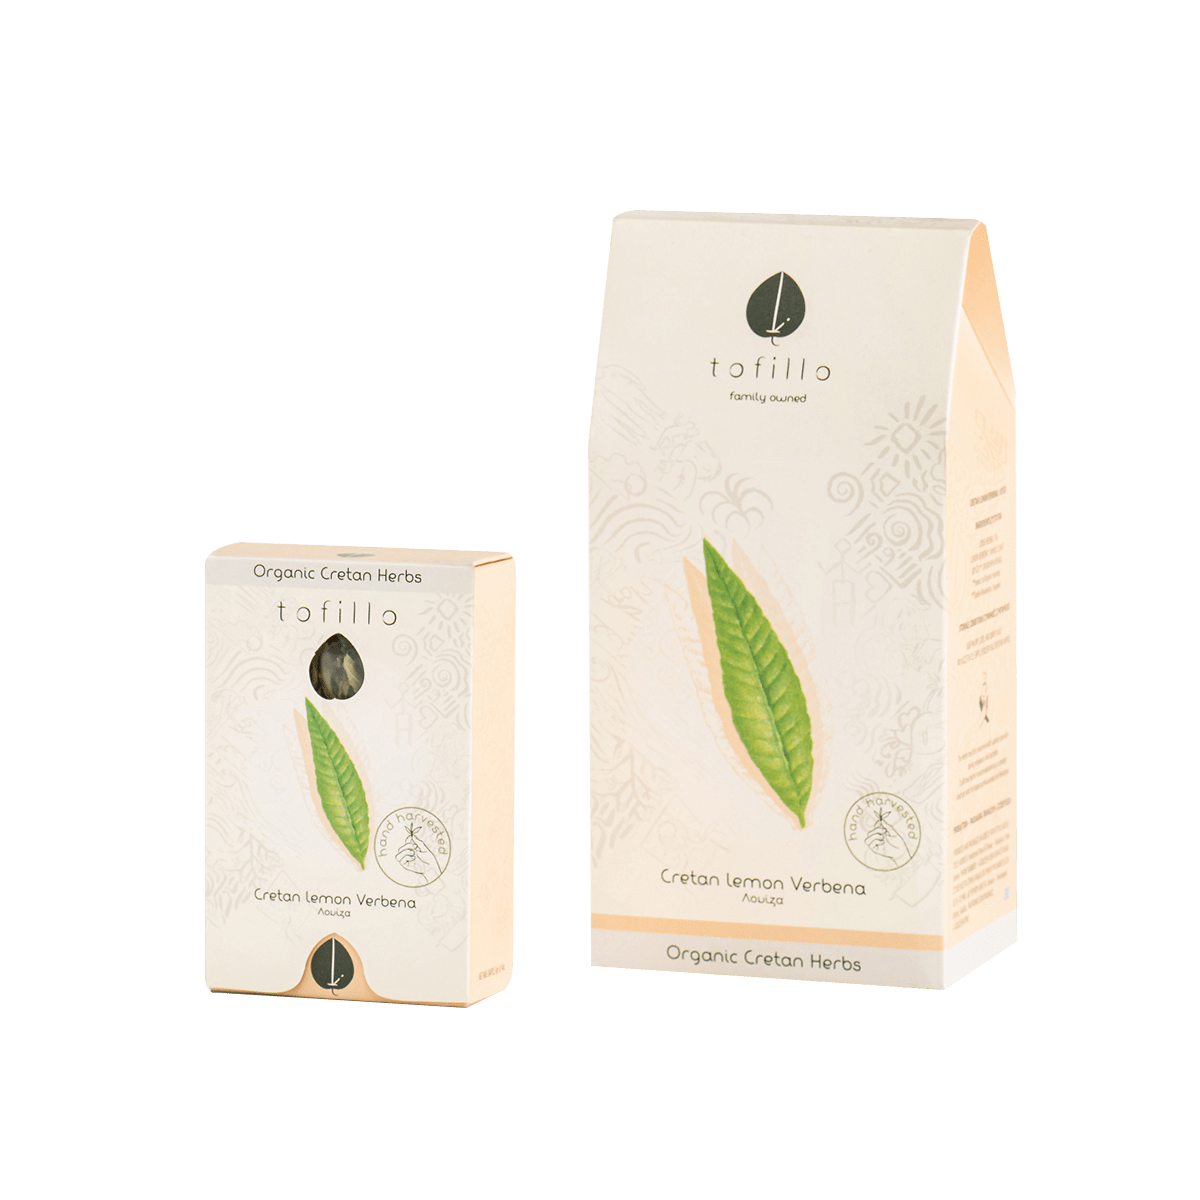 TOFILLO bio-organikus krétai citrom verbéna tea